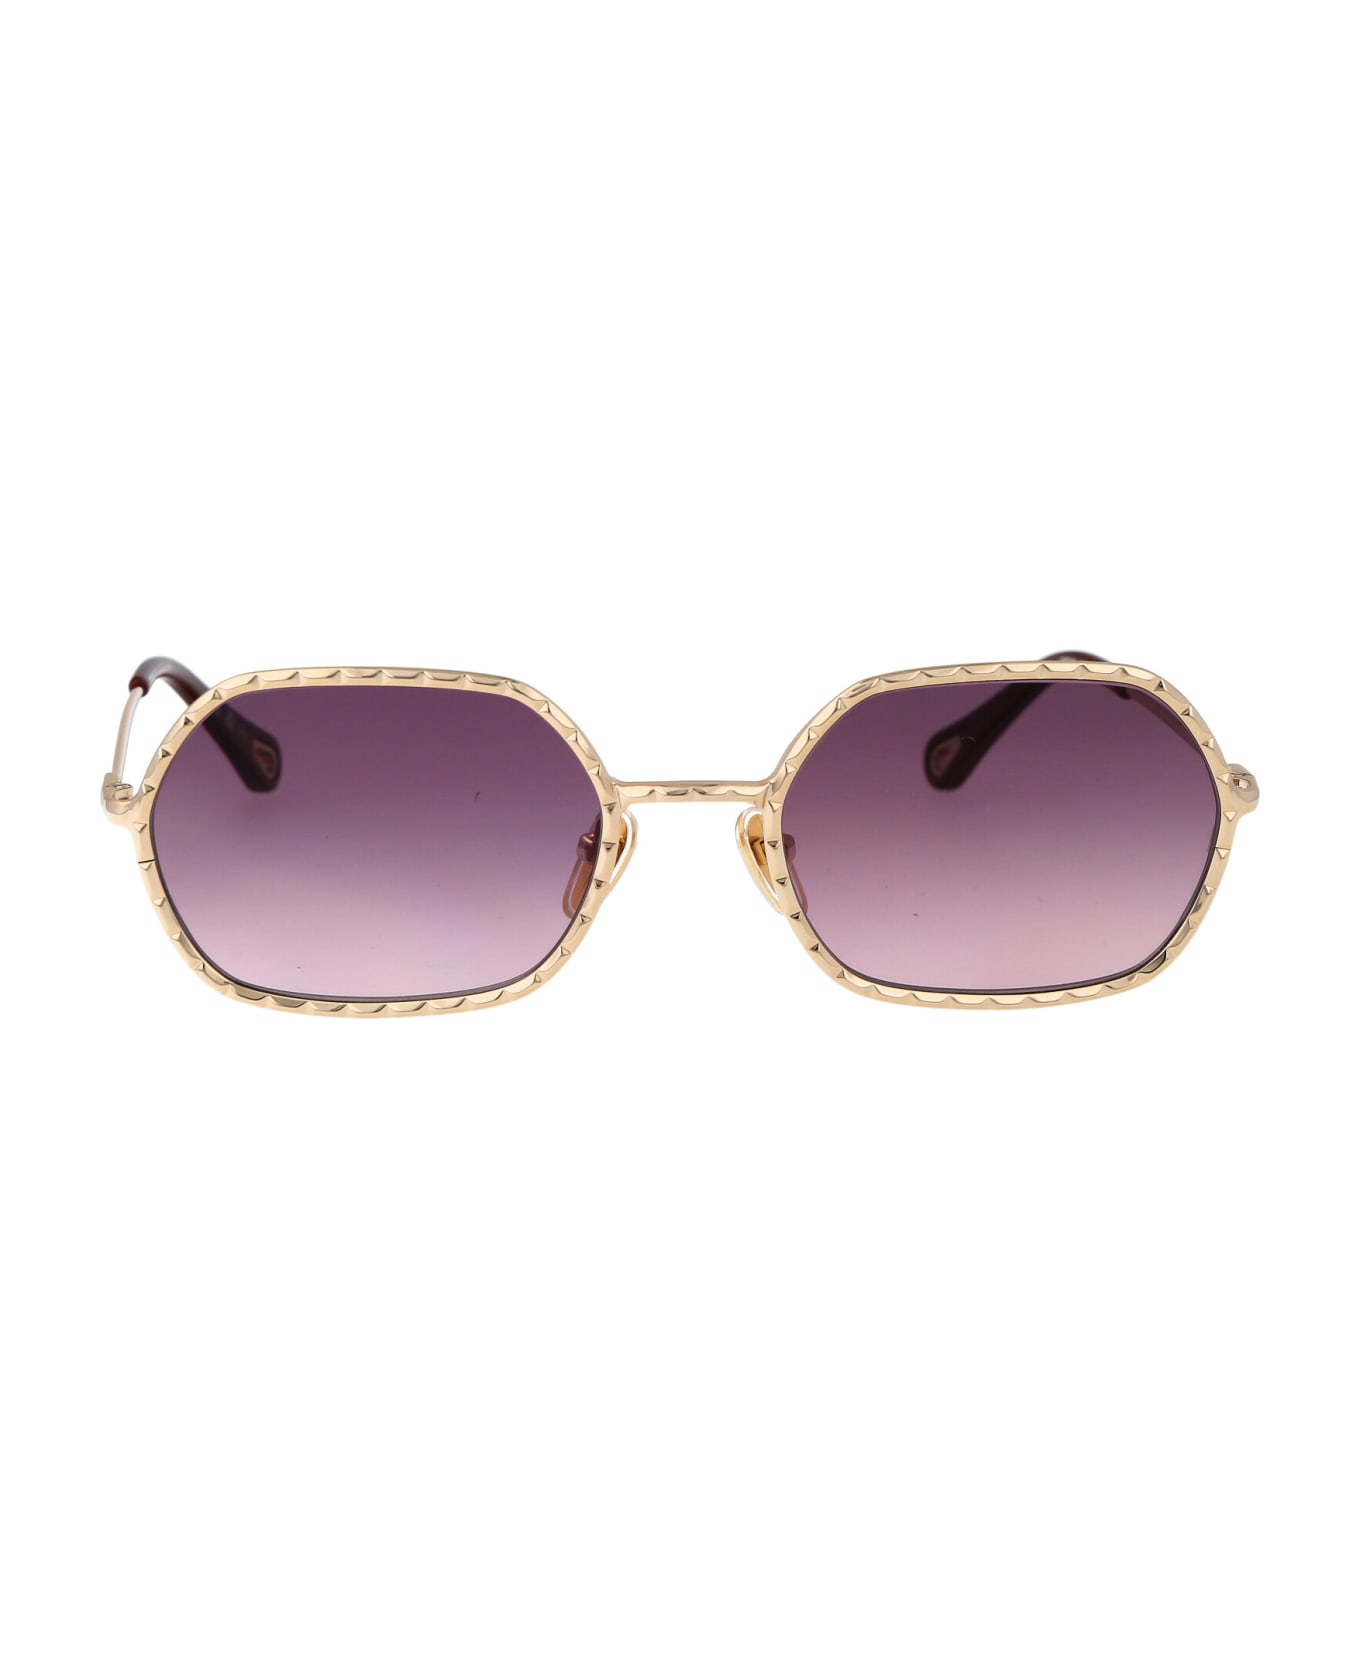 Chloé Eyewear Ch0231s Sunglasses - 003 GOLD GOLD VIOLET